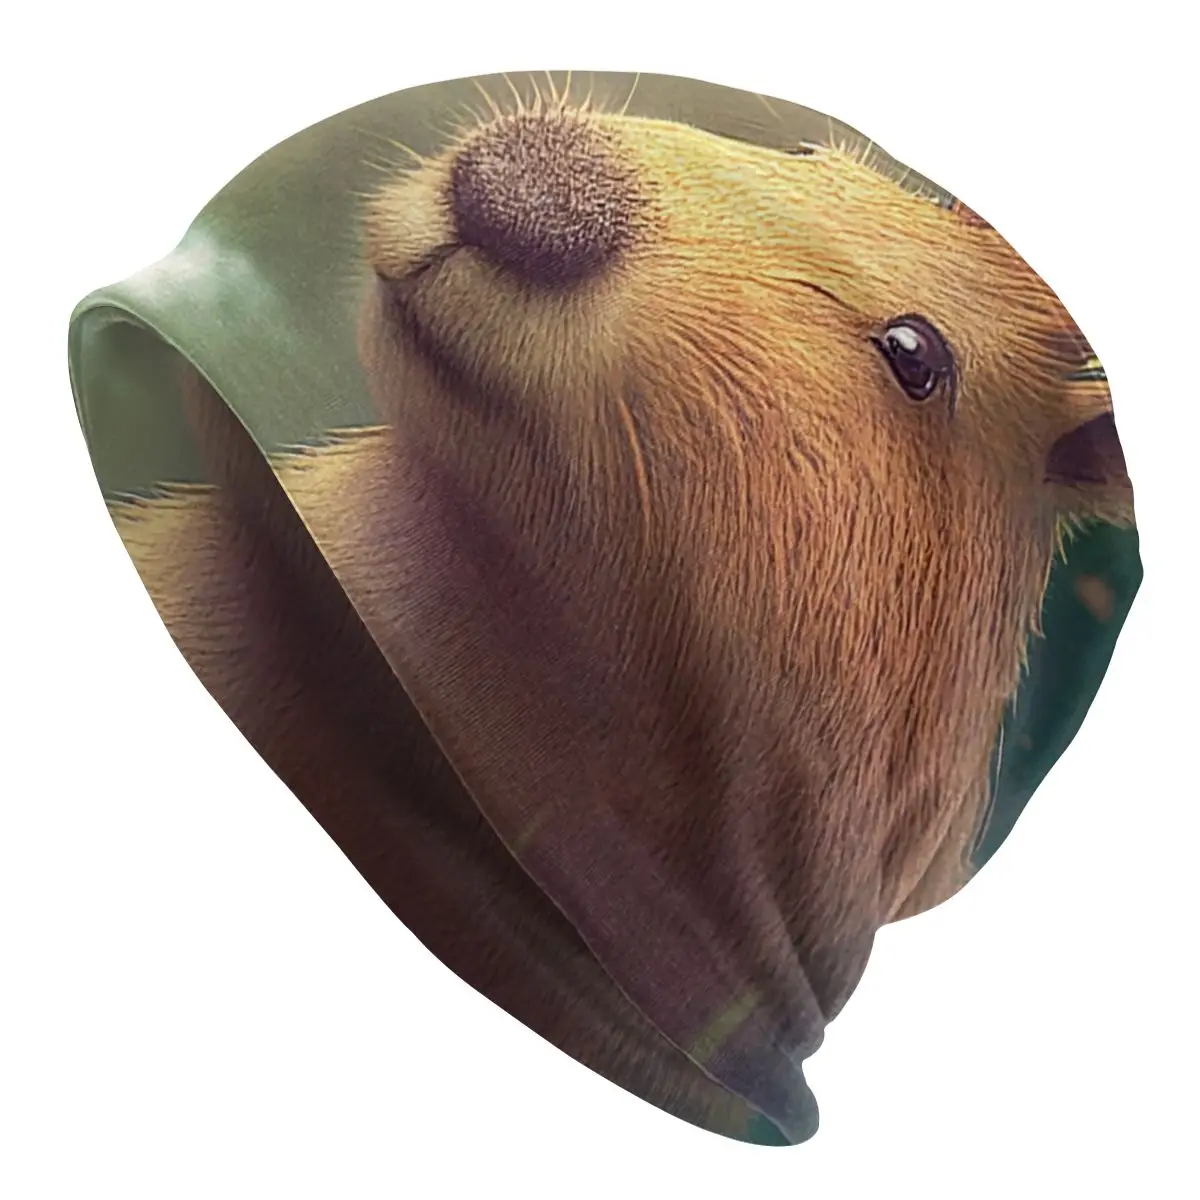 

Fuzzy Capybara In The Grass Bonnet Femme Fashion Knitted Skullies Beanies Cap Men Women Warm Winter Slouchy Beanie Hat